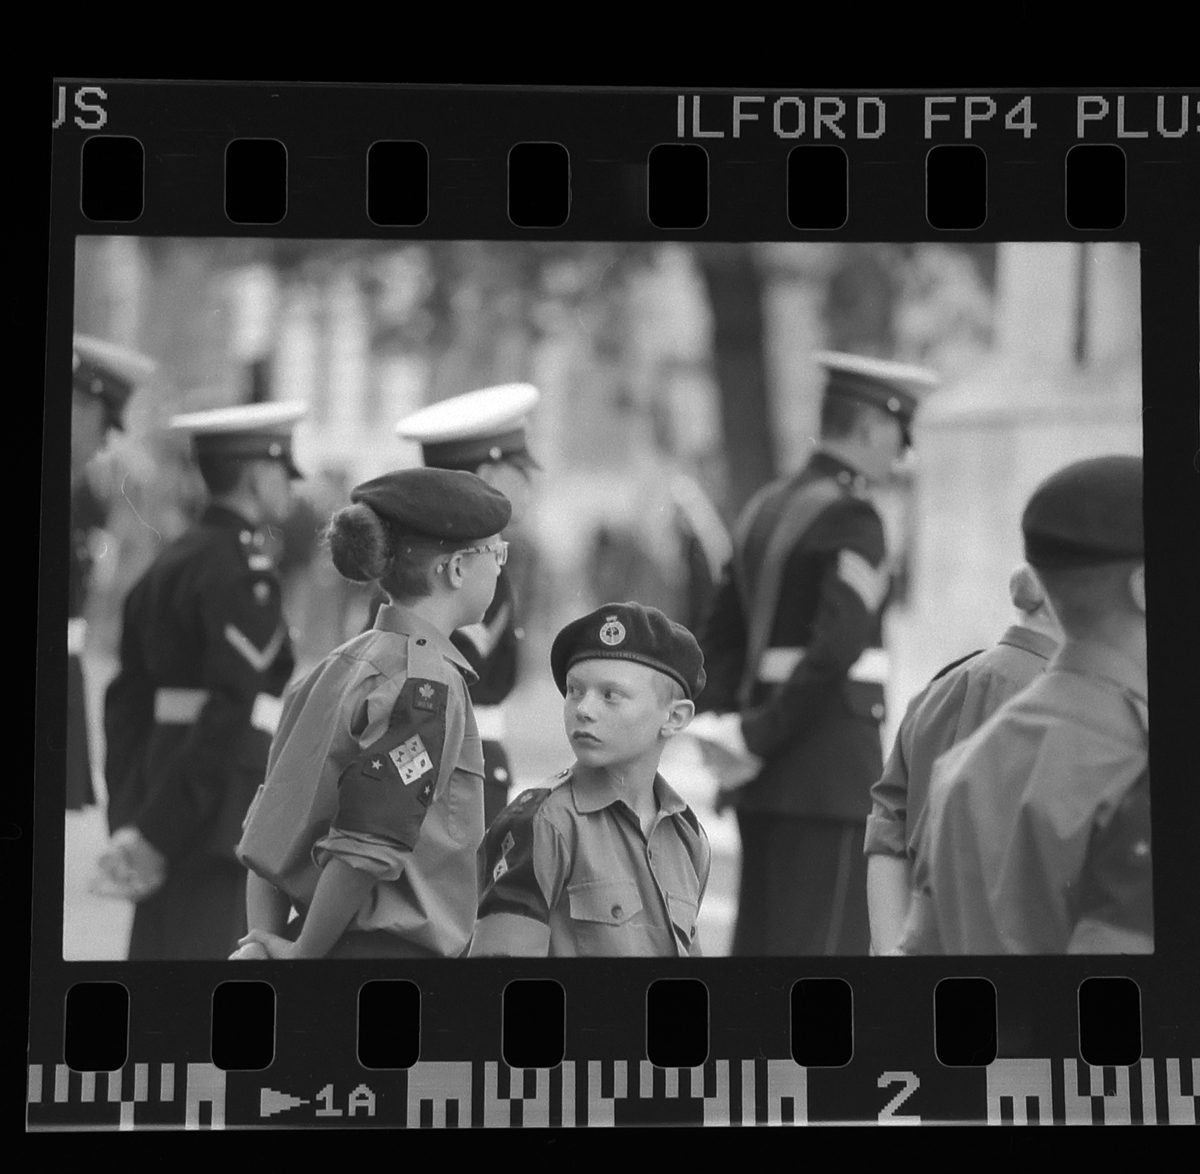 Shot on ILFORD FP4 plus black and white film by Simon King